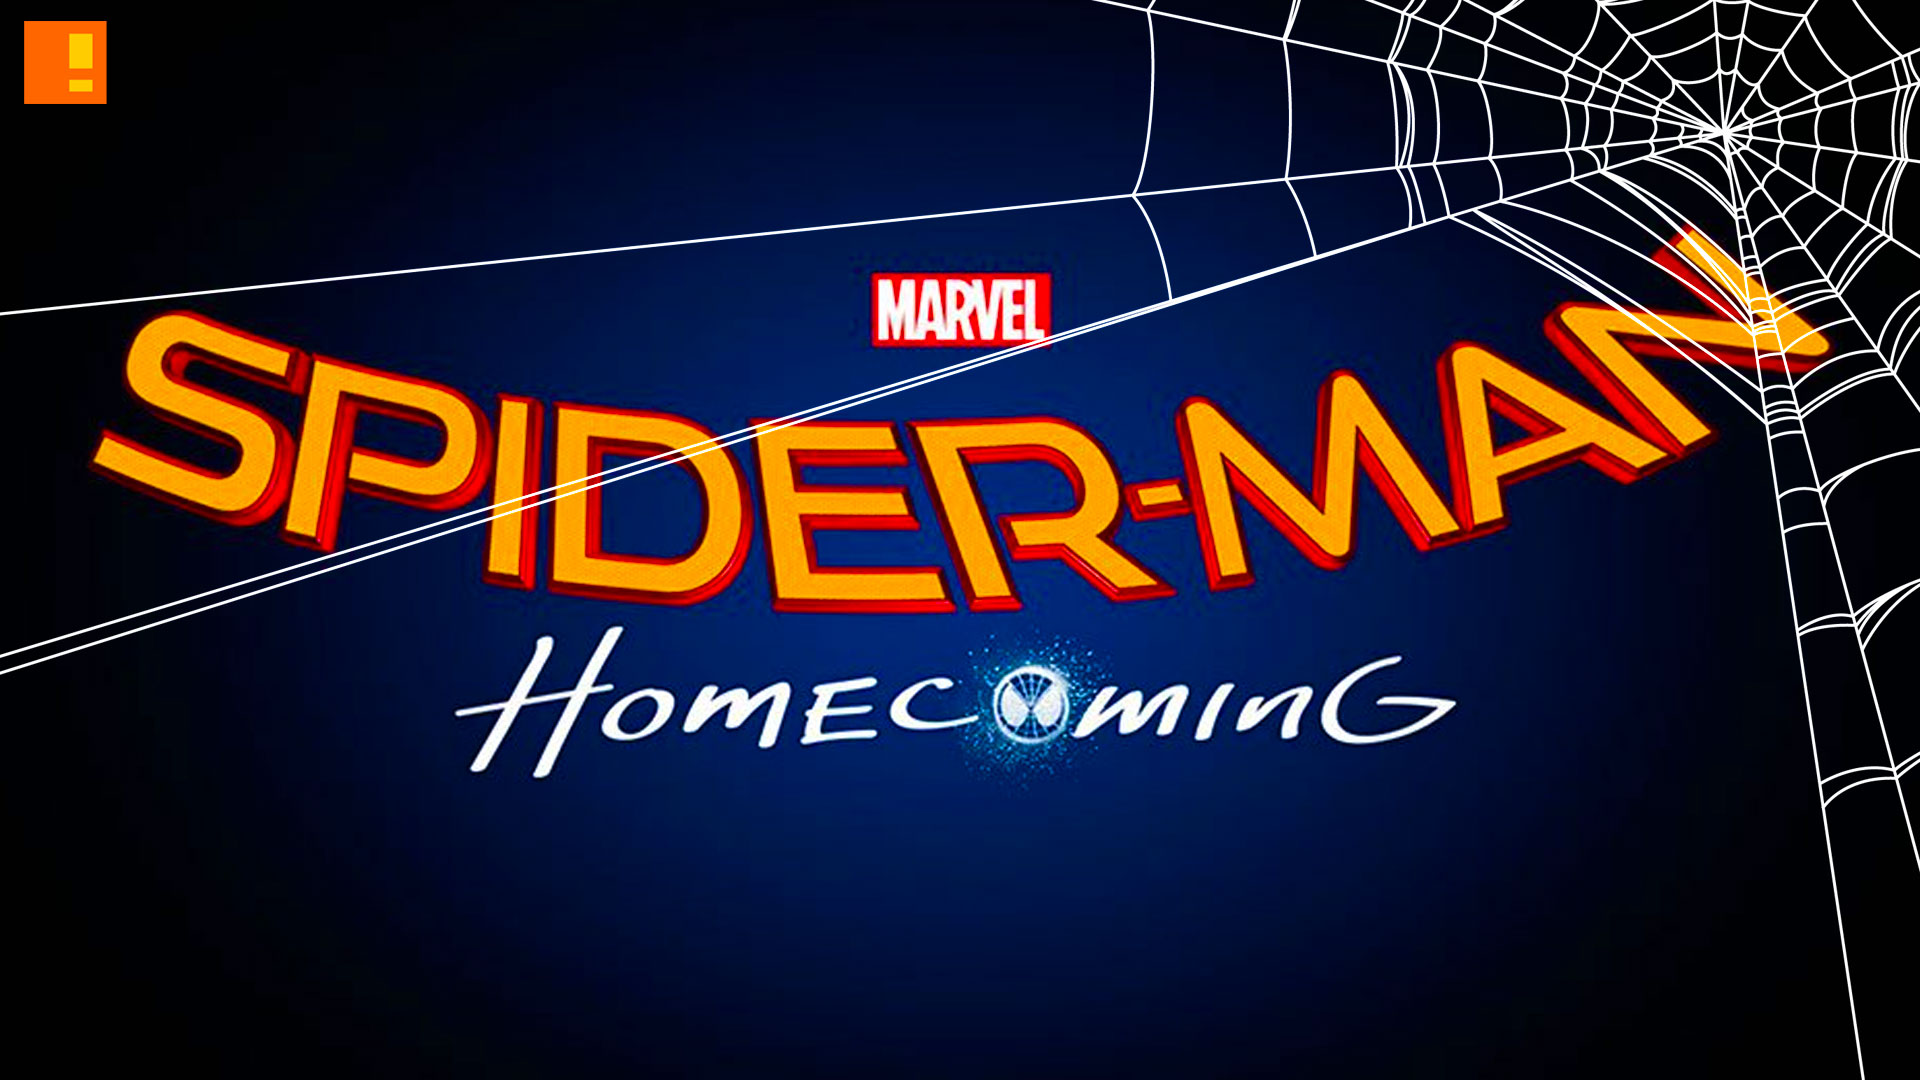 spider-man, Homecoming, marvel, the action pixel, tom holland, peter parker, sony, marvel, tony stark , robert downey jr., iron man